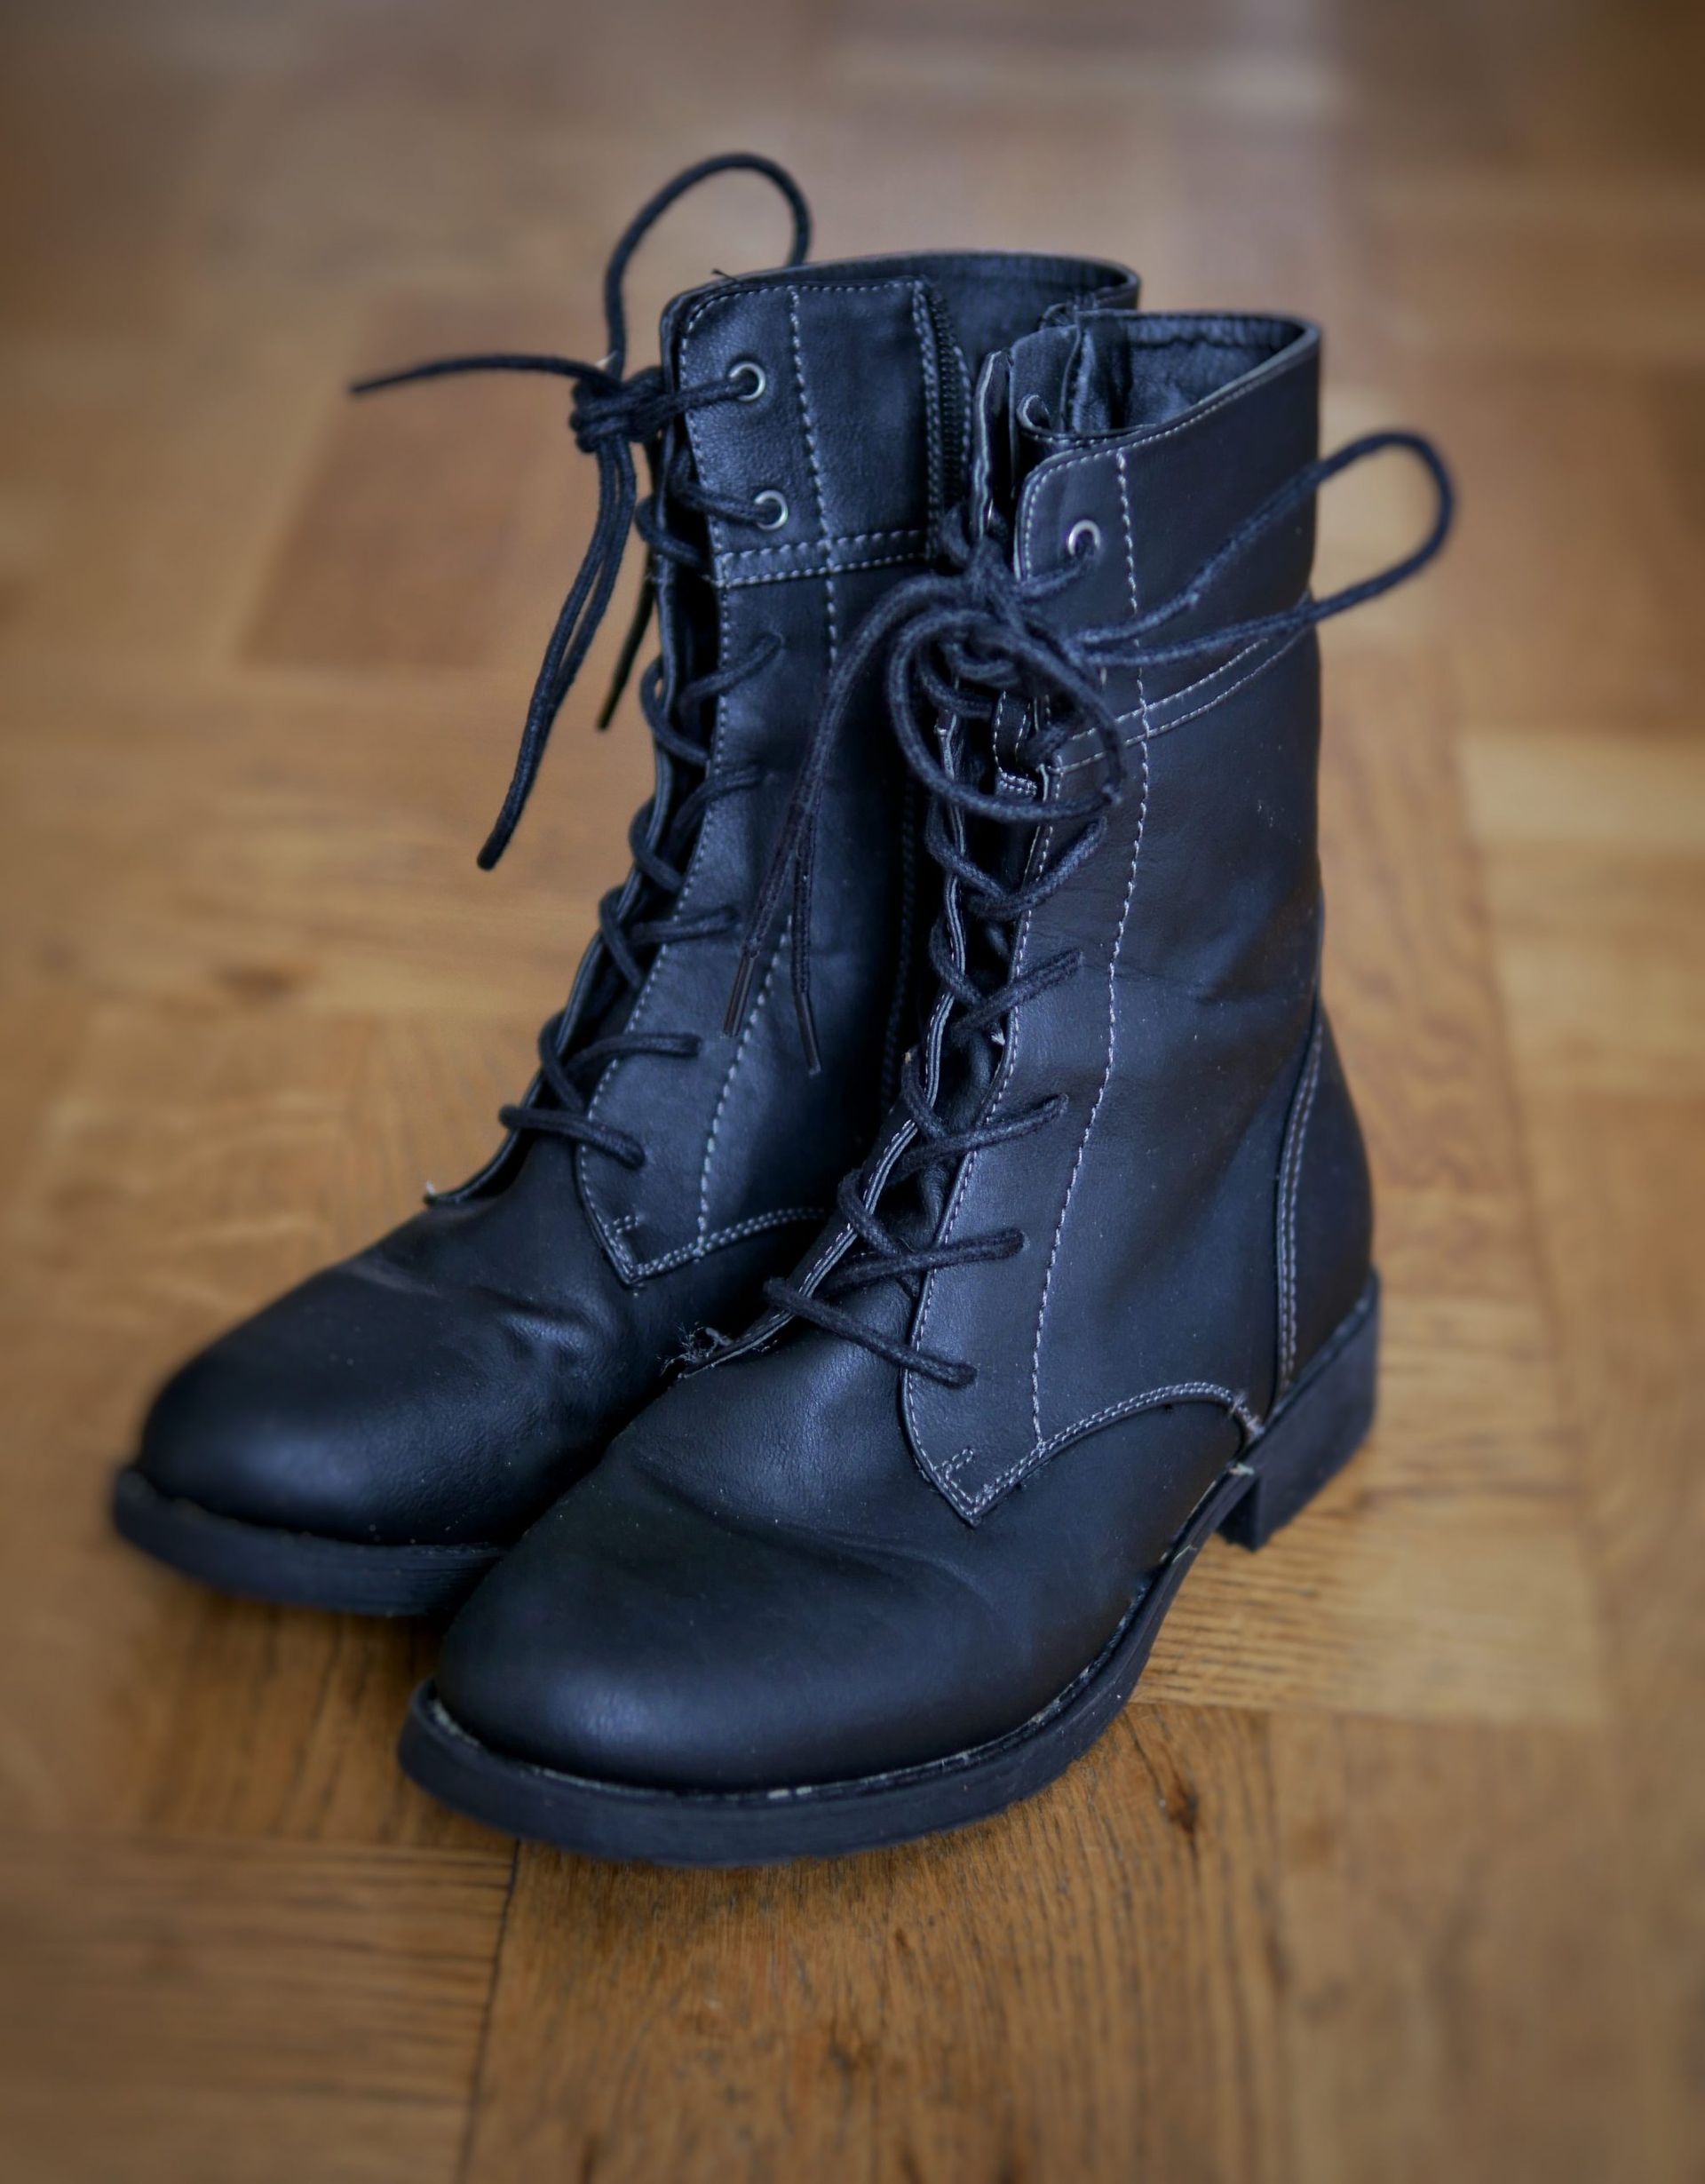 Black winter boots.